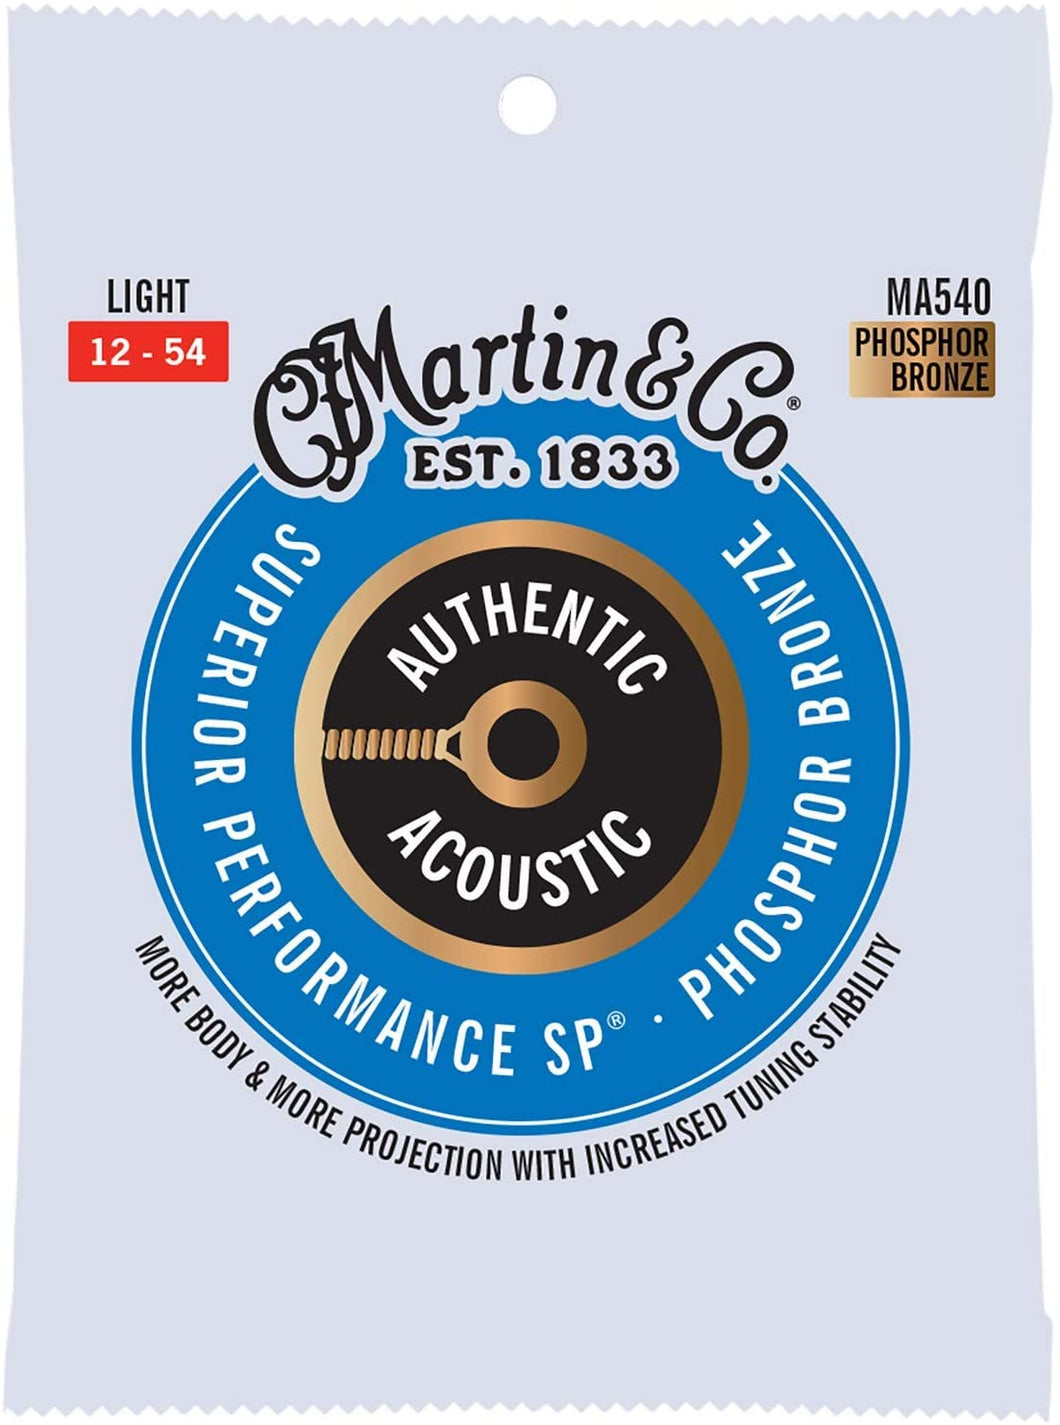 MARTIN MA540 LIGHT 12 - 54 PHOSPHOR BRONZE AUTHENTIC ACOUSTIC SUPERIOR PERFORMANCE SP® GUITAR STRINGS